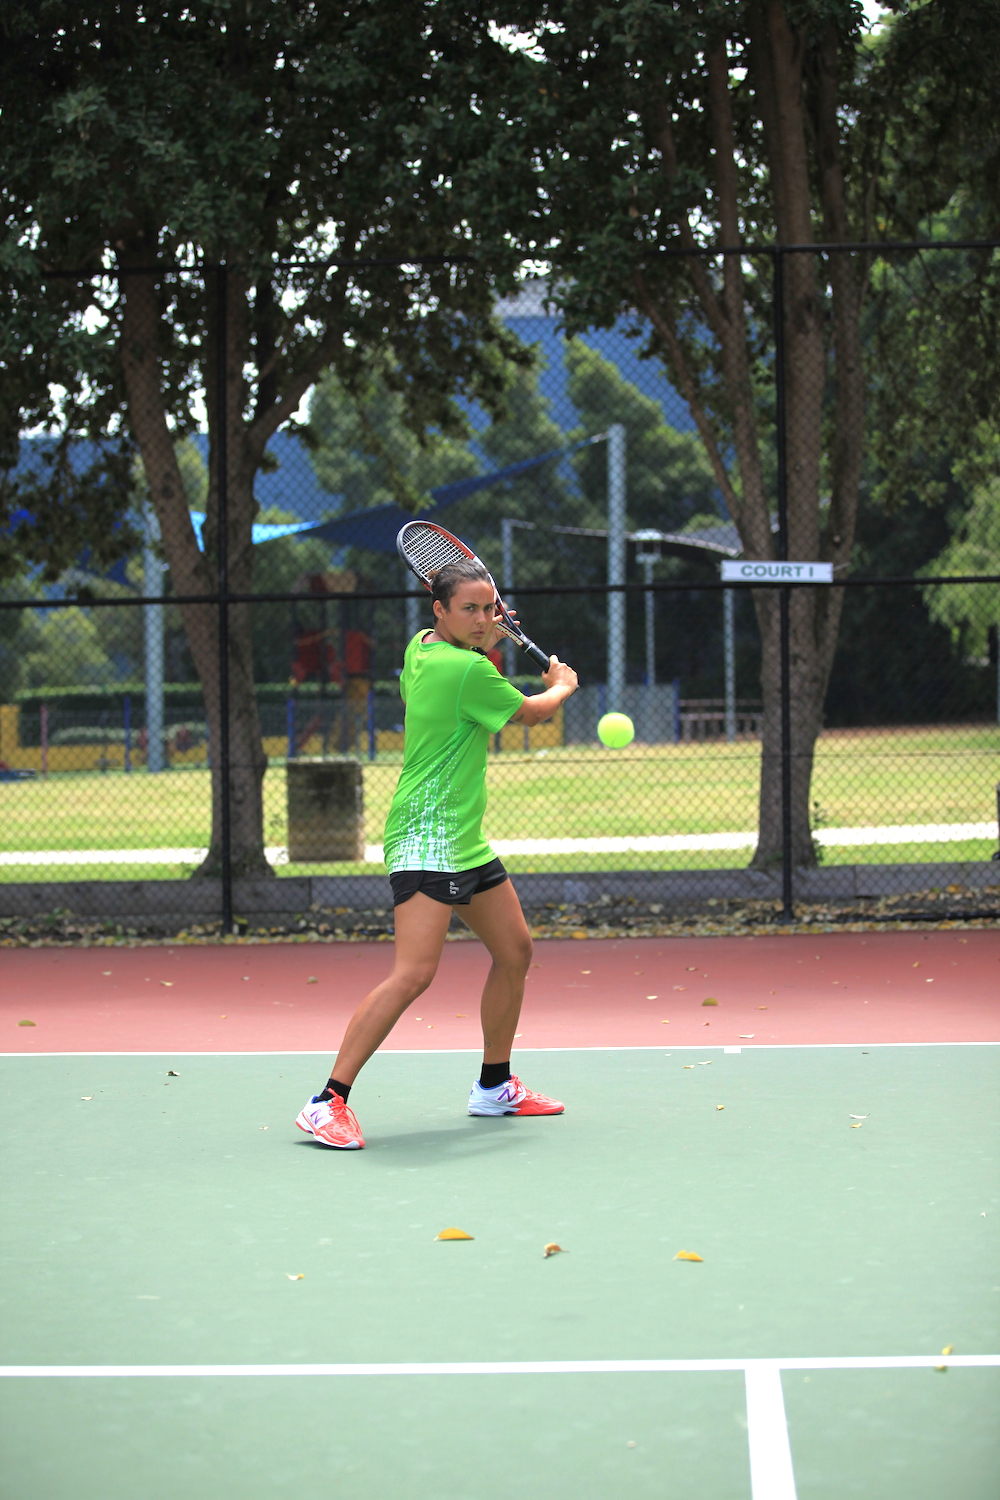 City Community Tennis |  | Turruwul Park Tennis Courts Turruwul Park Rosthschild Avenue Rosebery, Rosebery NSW 2018, Australia | 0433899644 OR +61 433 899 644